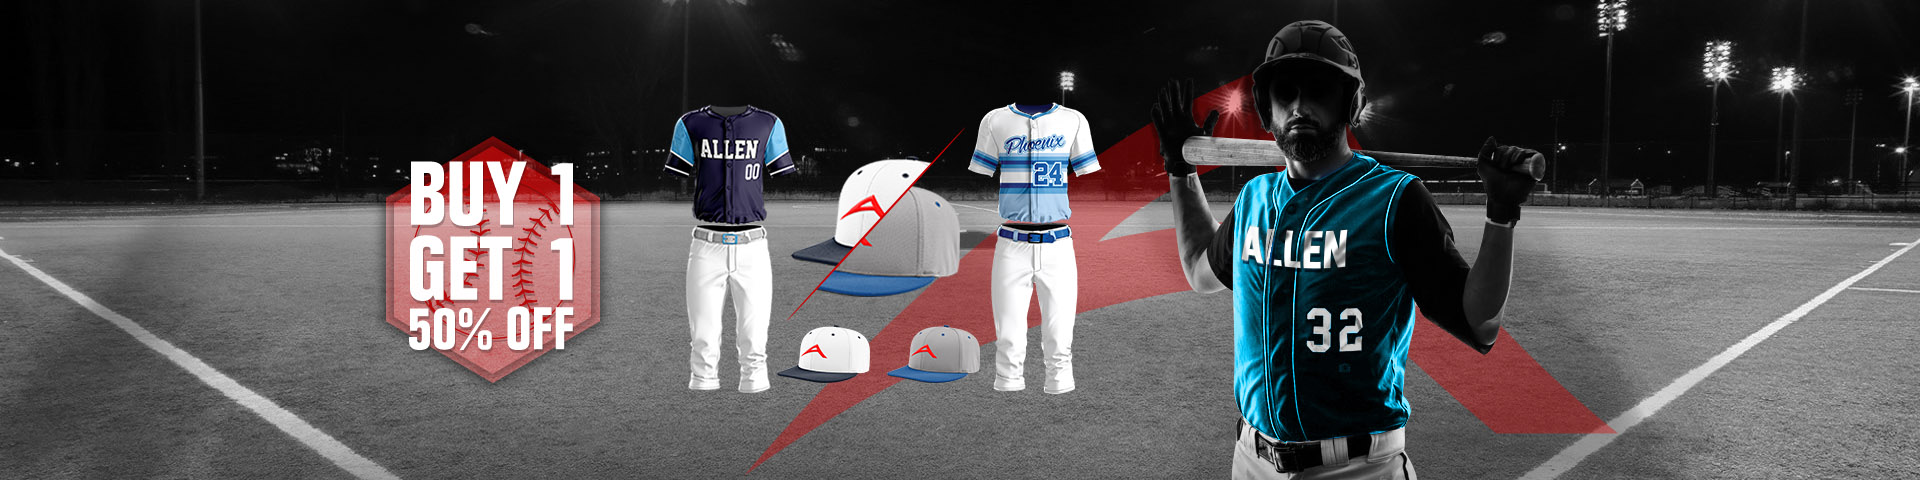 Baseball Uniforms & Apparel - Something for Every Team